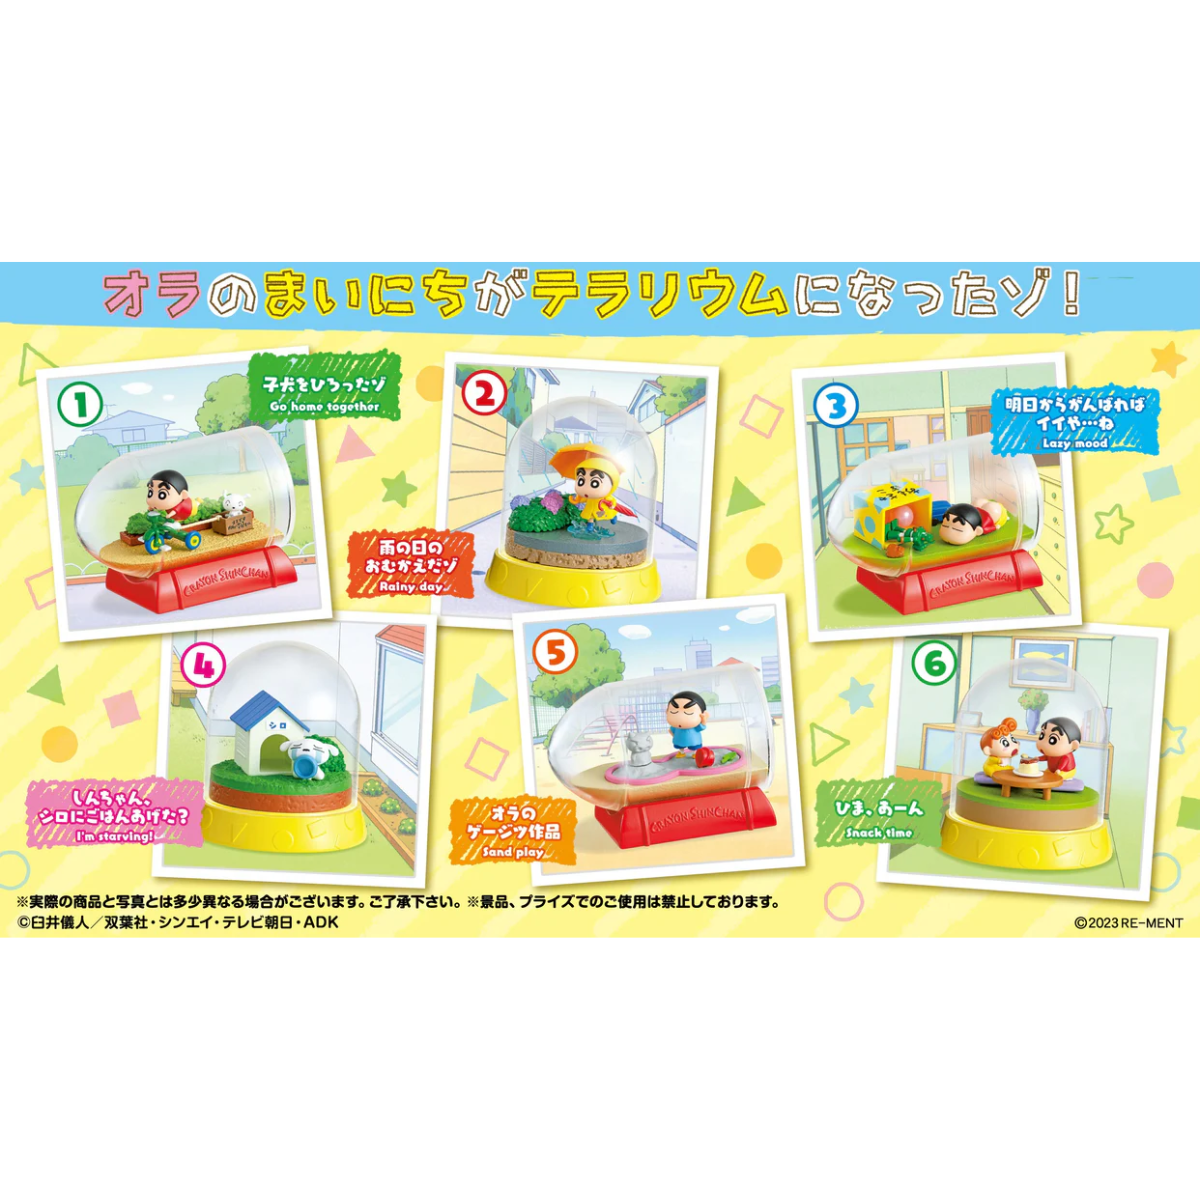 Re-Ment Crayon Shinchan Terrarium-Single Box-Re-Ment-Ace Cards & Collectibles